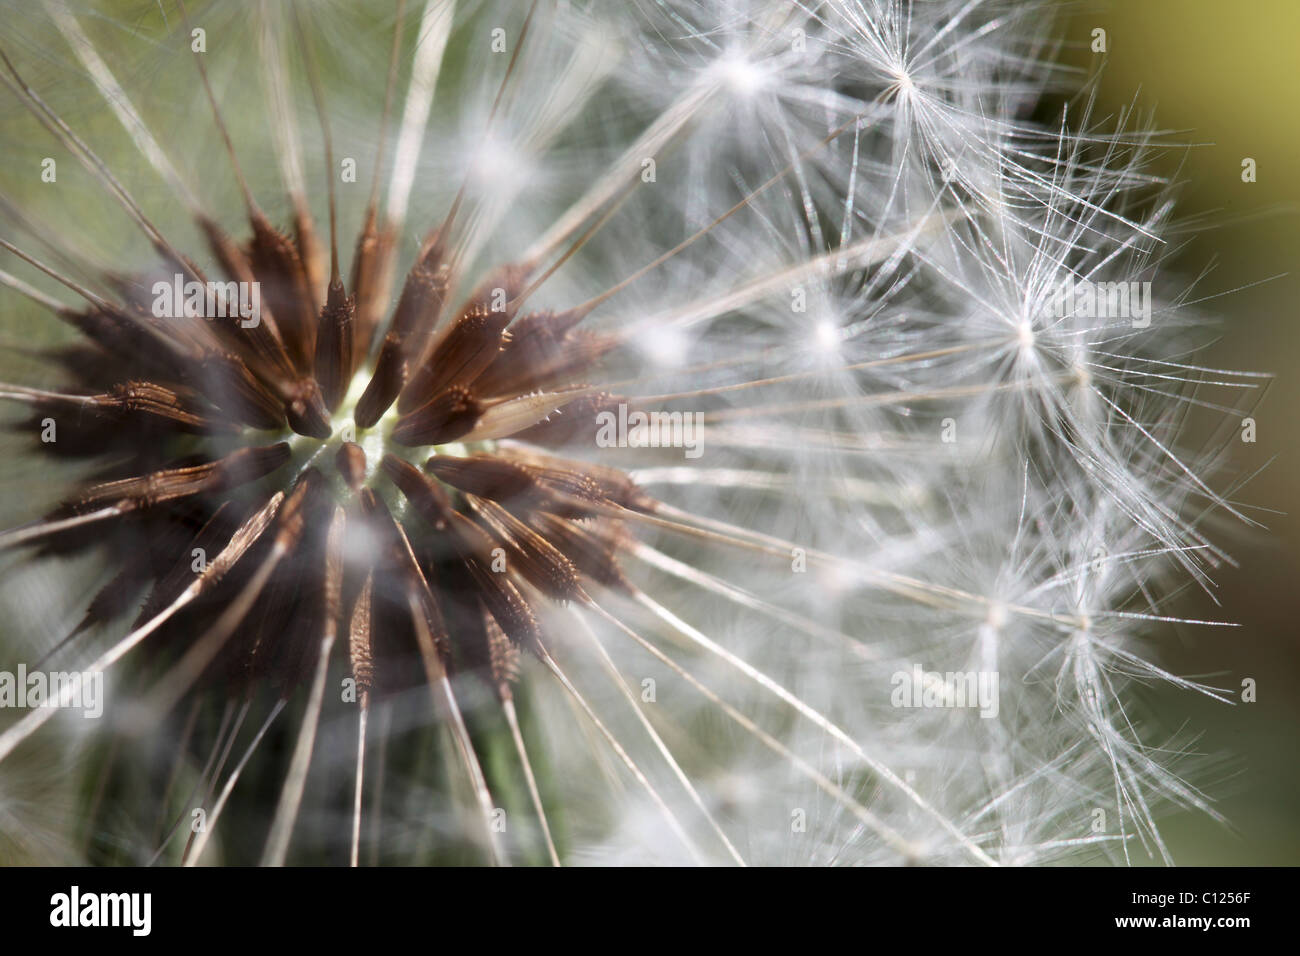 dandelion head with seedlings Stock Photo